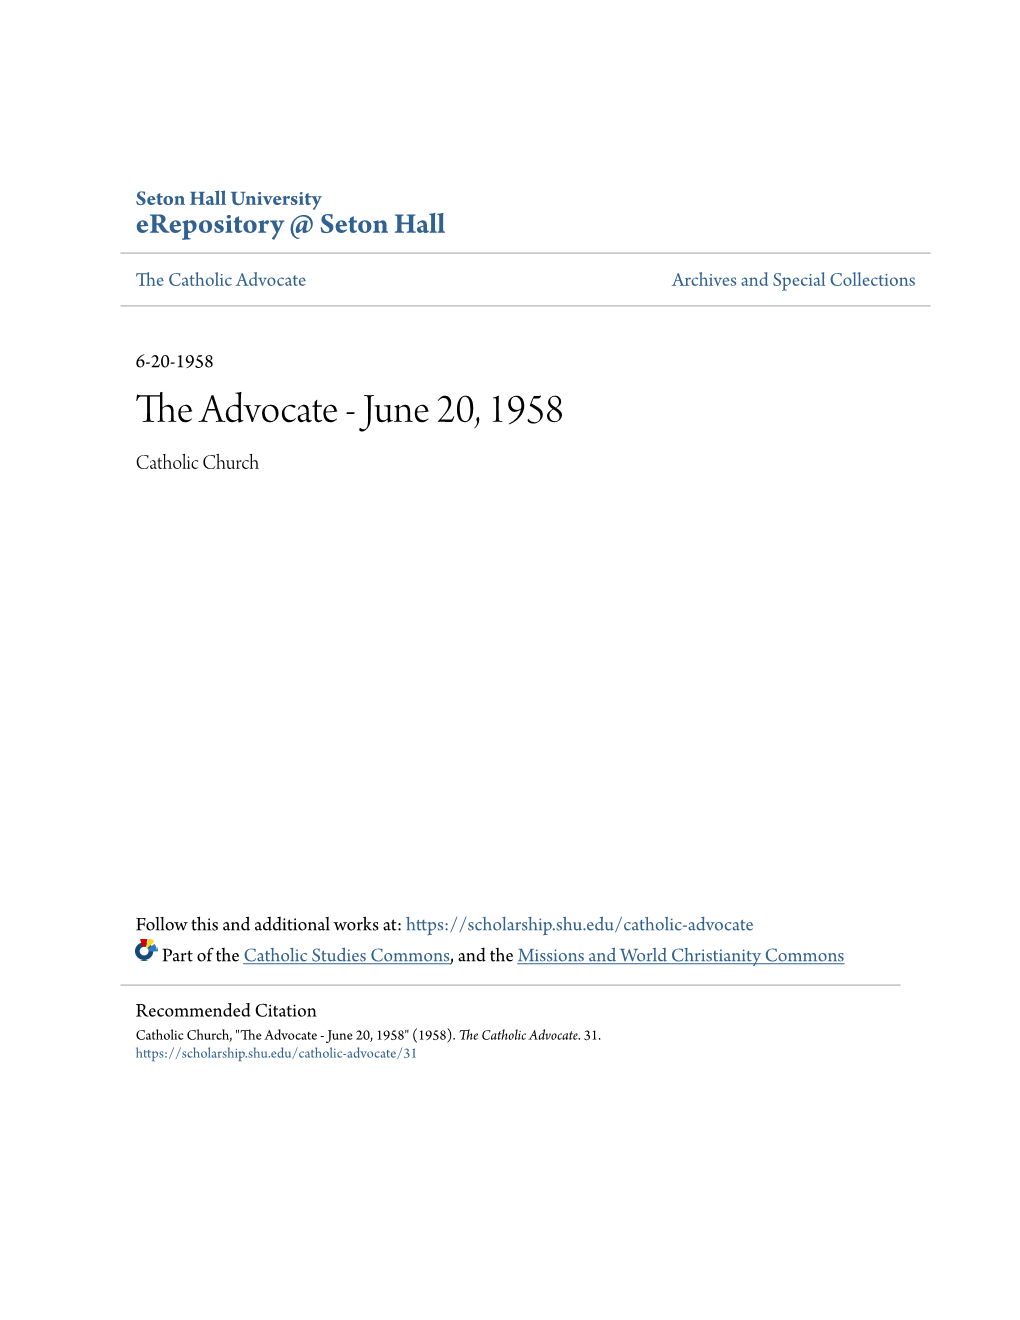 The Advocate - June 20, 1958 Catholic Church